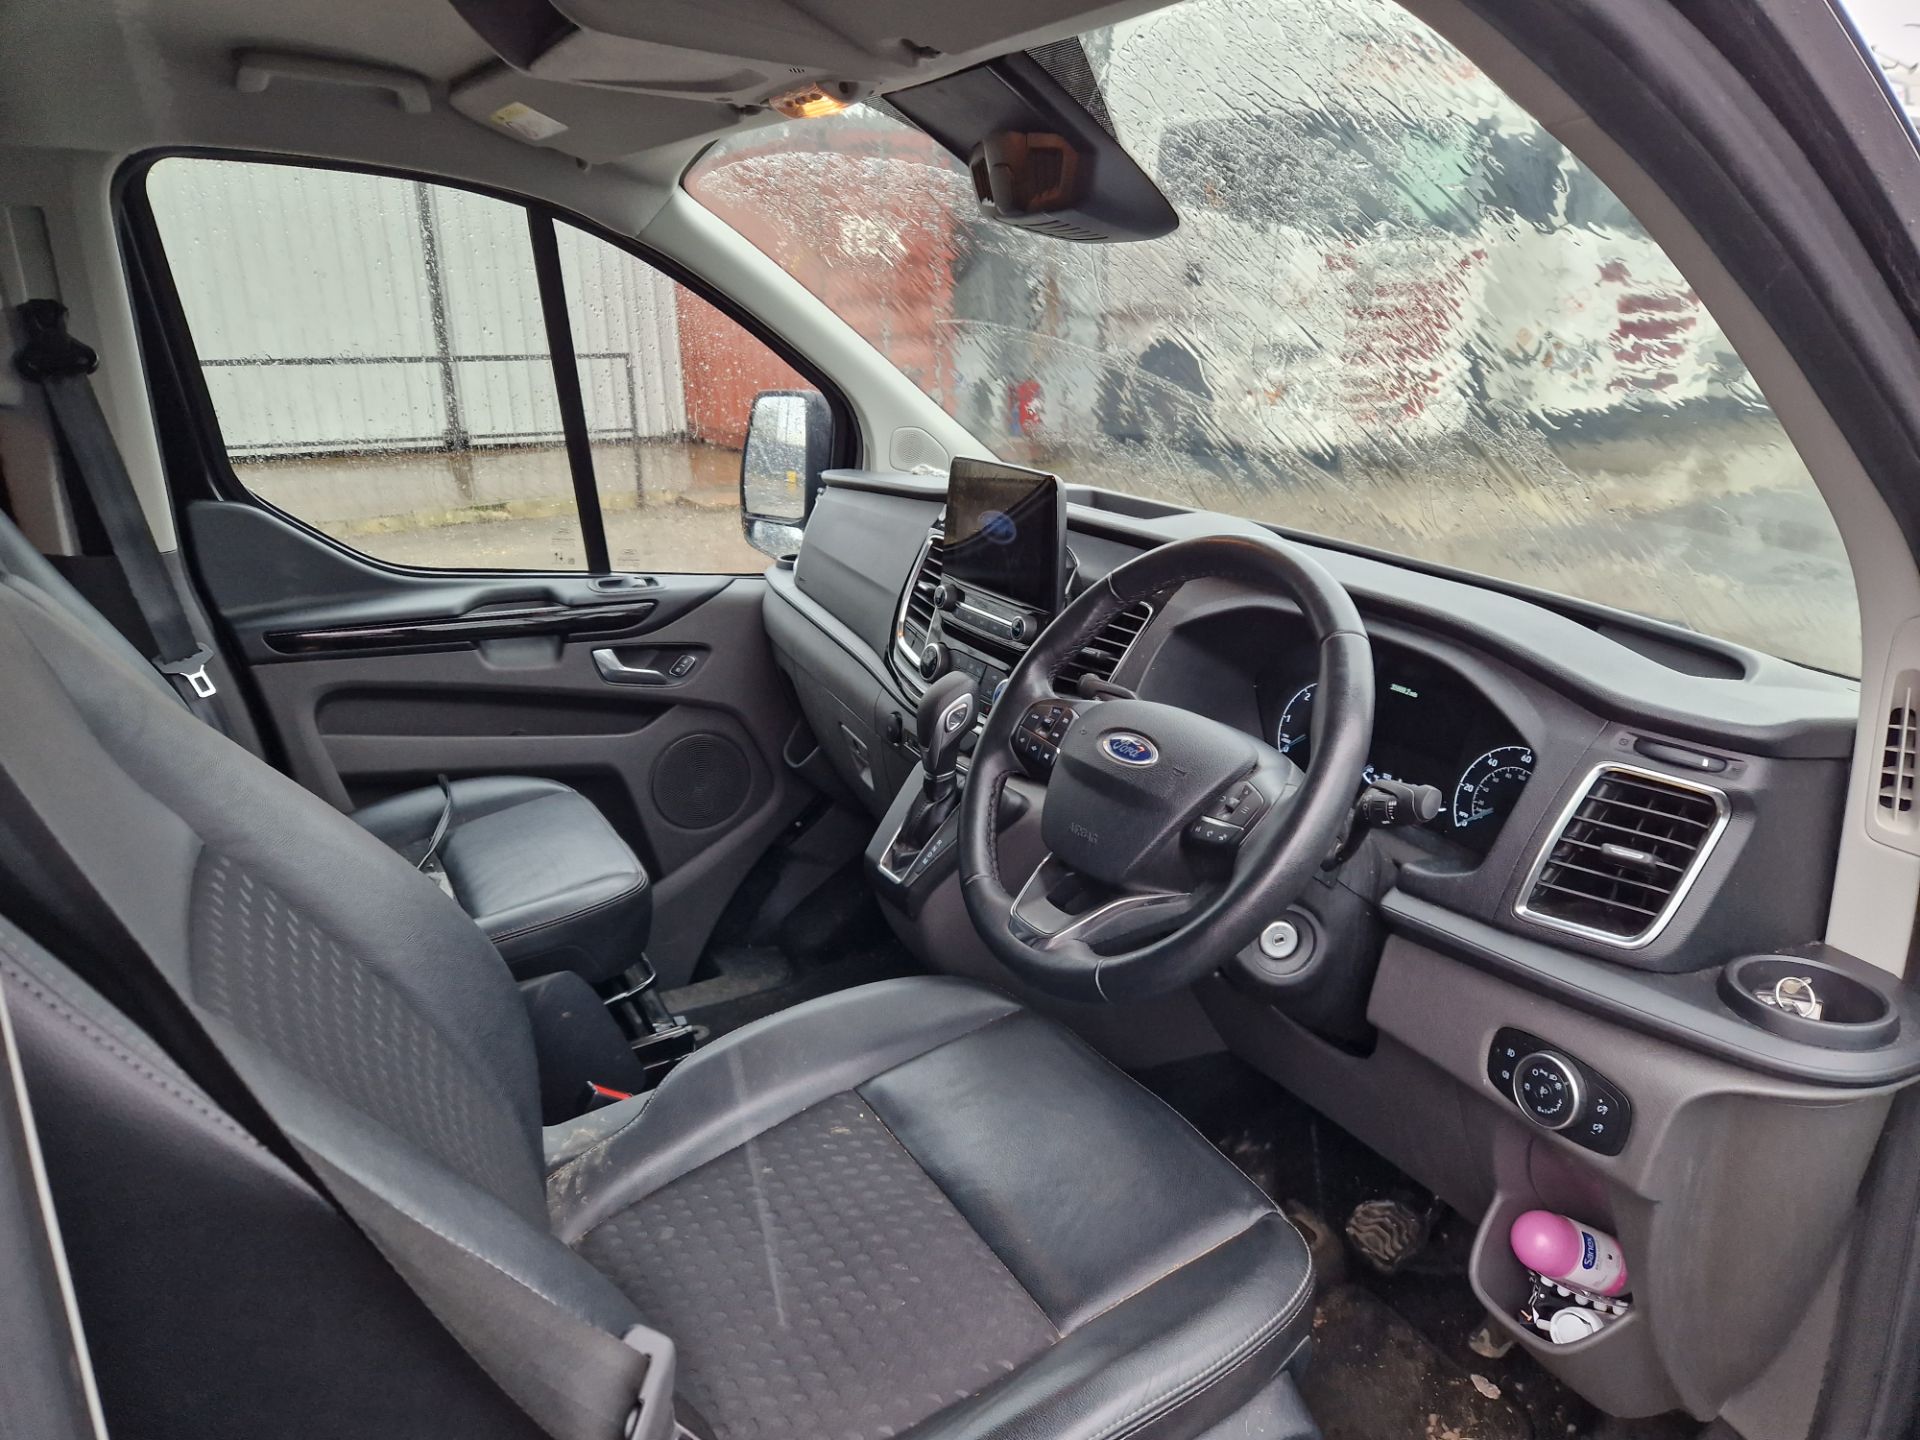 Ford Transit Custom 310 L1 Sport 2.0TDCI 185ps Low Roof Crew Cab Van, Registration No. NX71 MJU, - Image 6 of 8